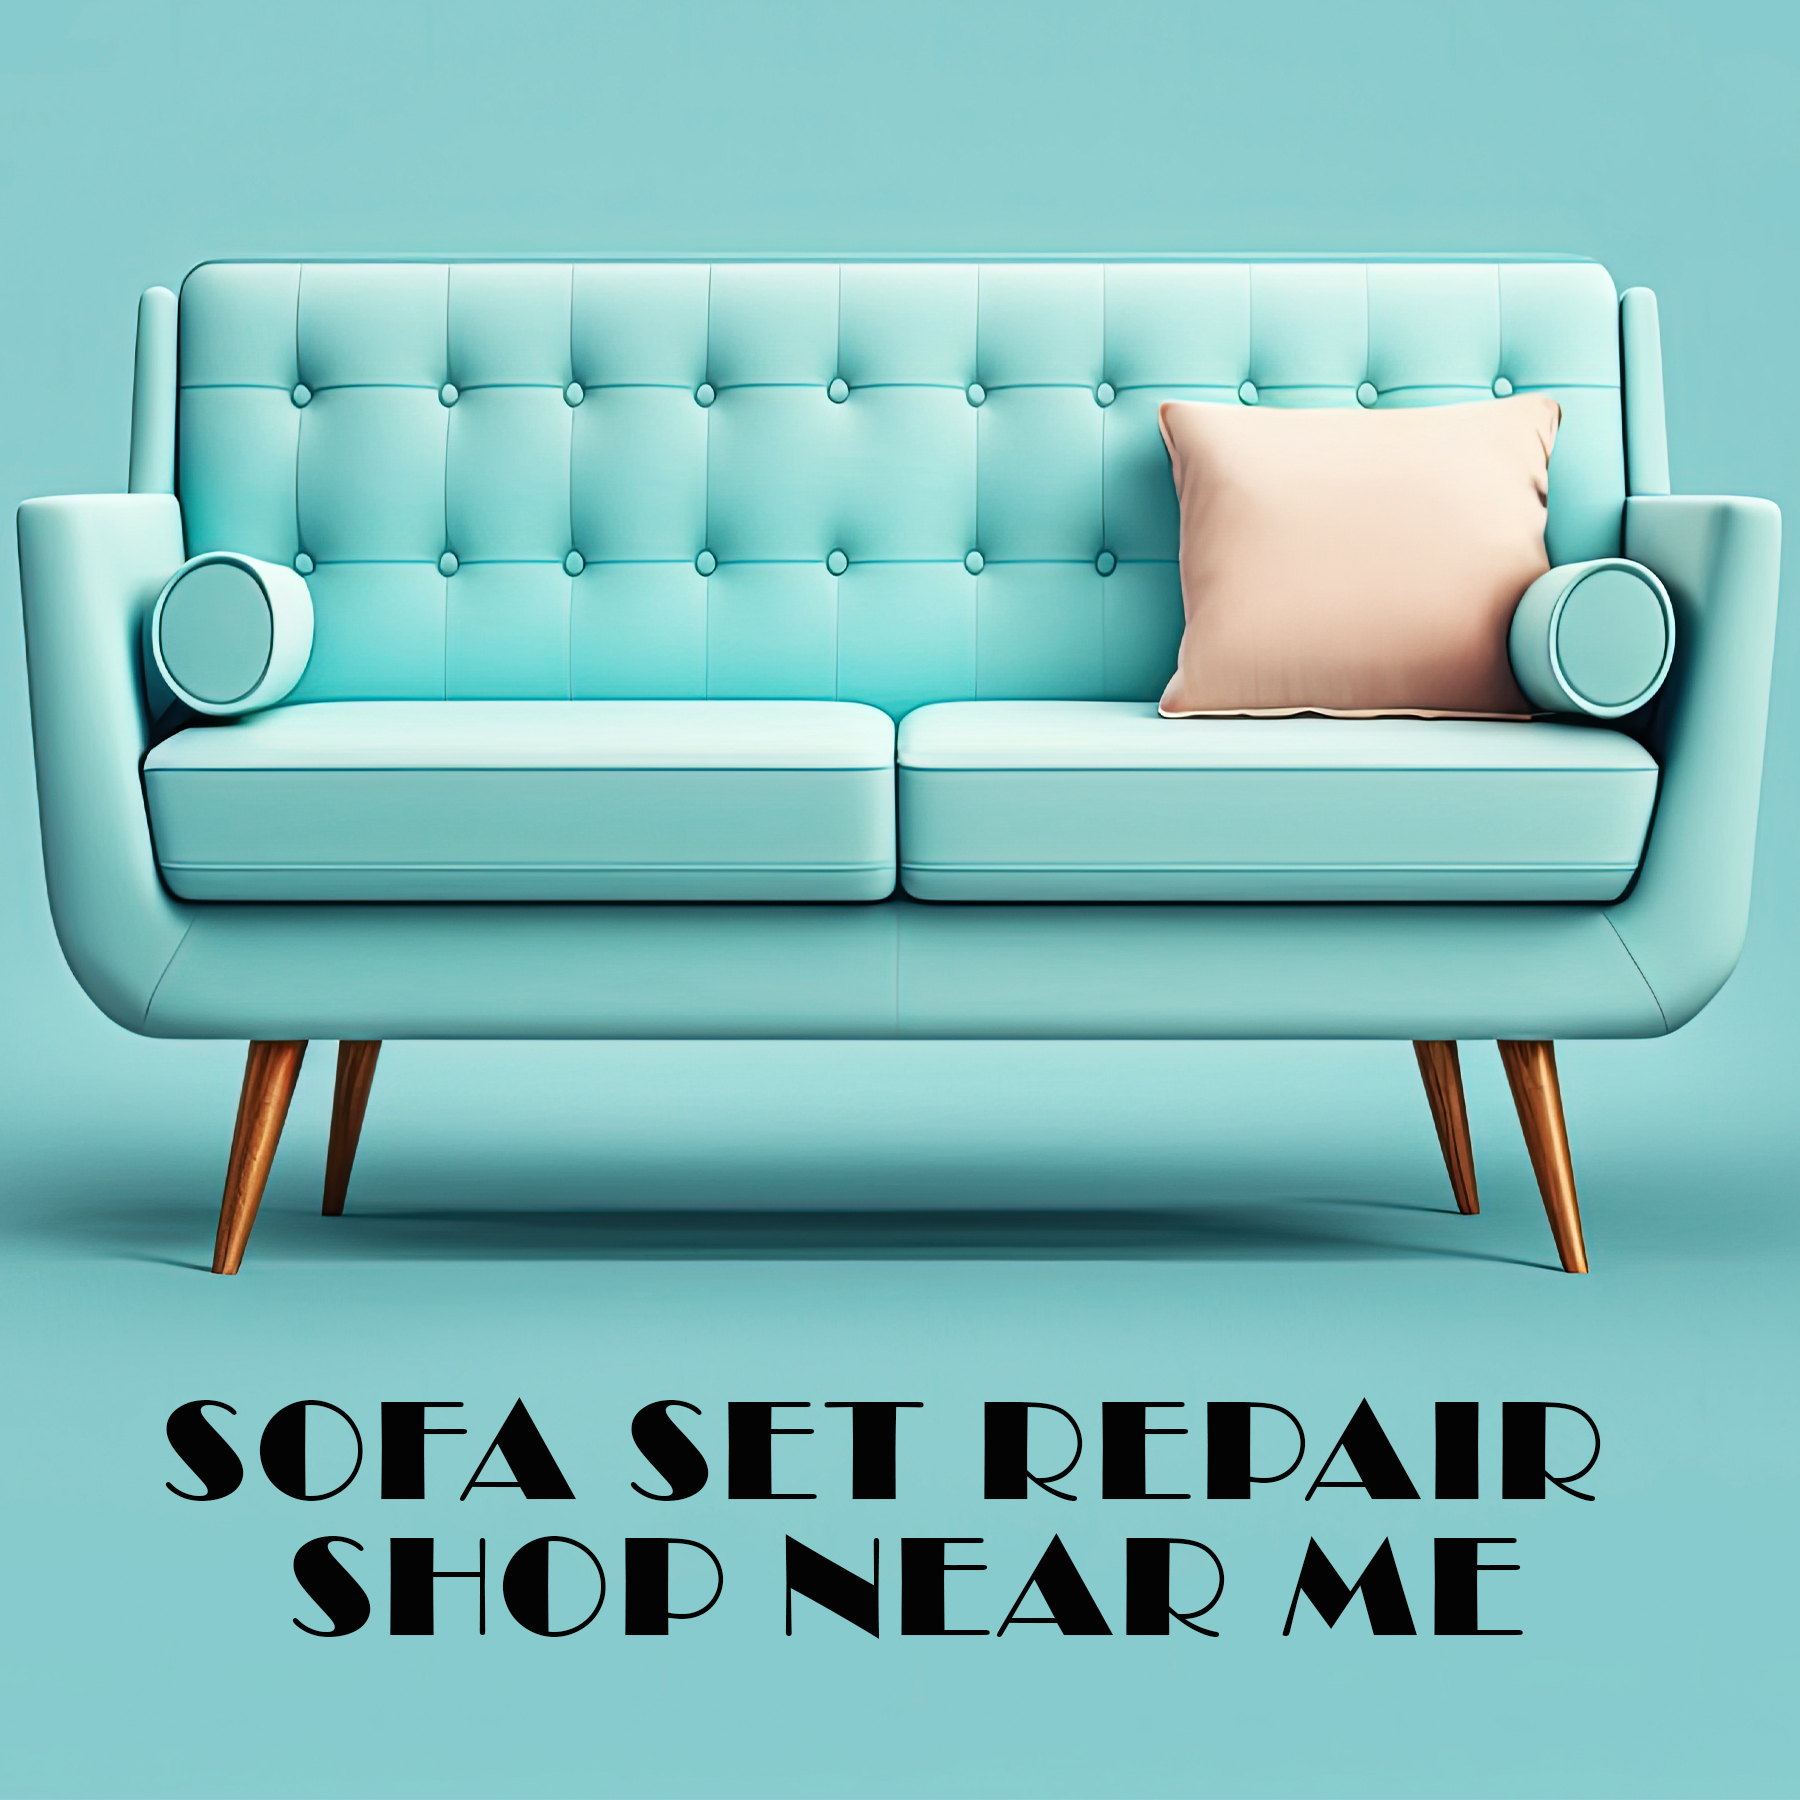 Sofa Set Repair Shop Near Me